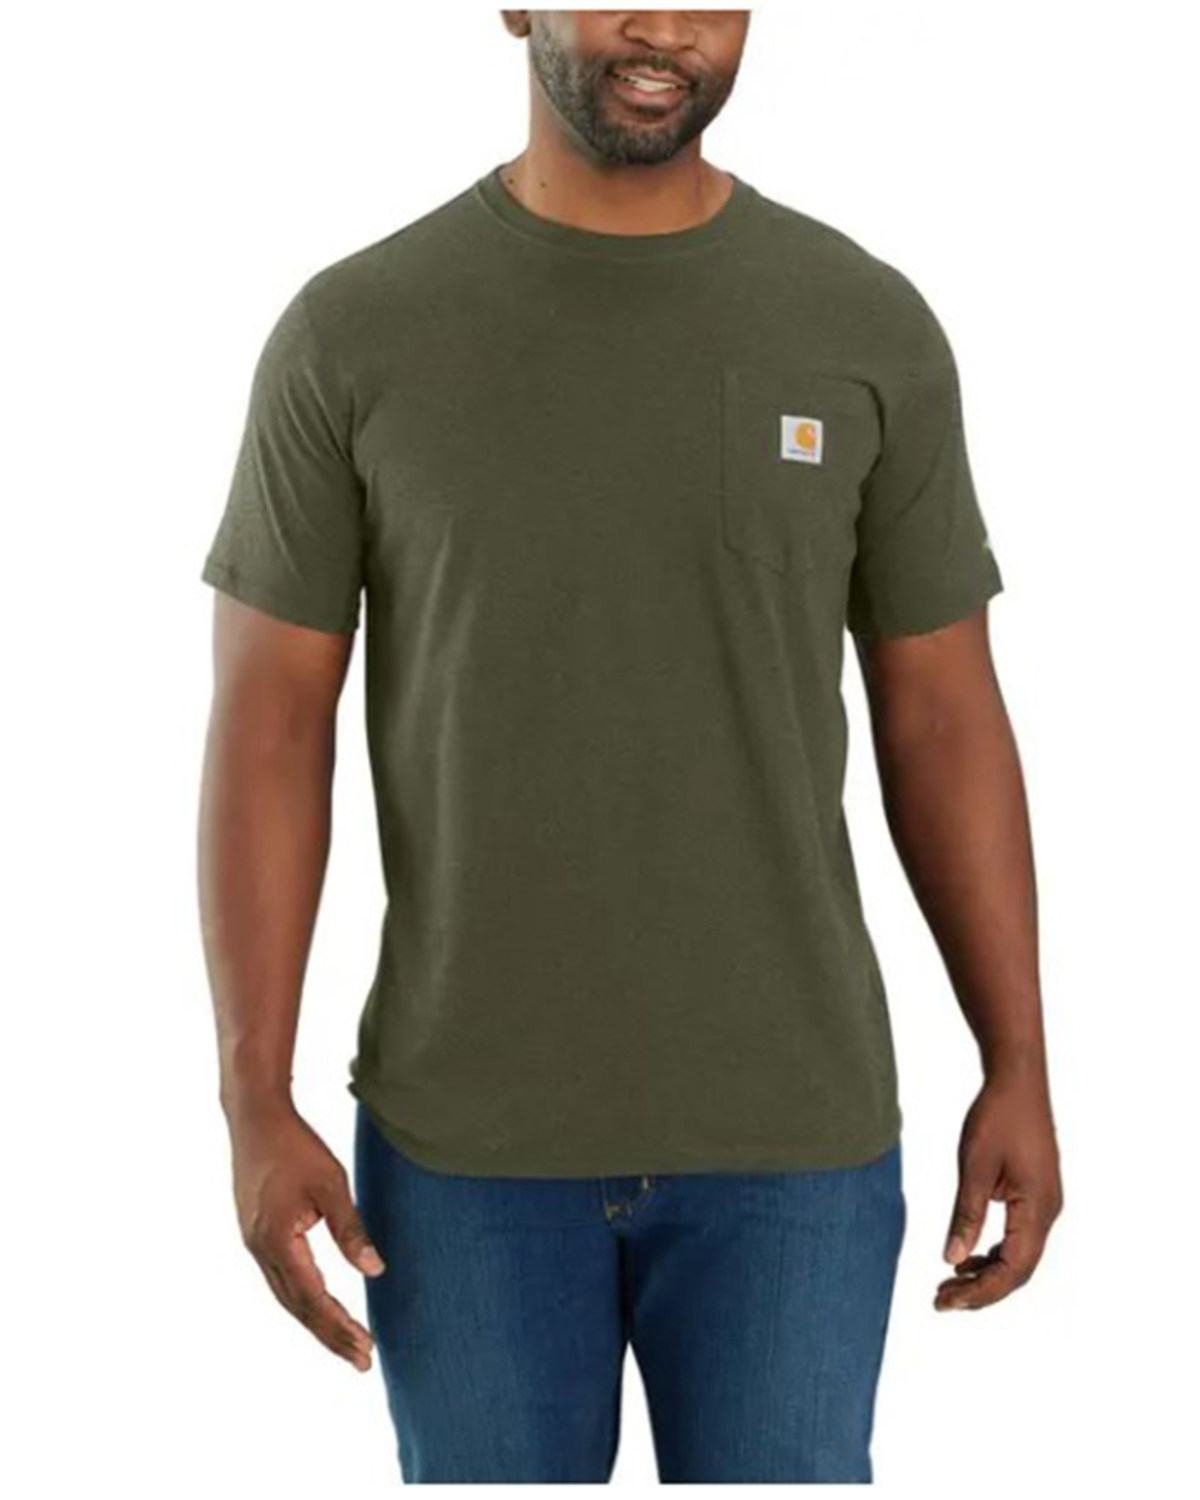 Carhartt Men's Force Relaxed Fit Midweight Short Sleeve Pocket T-Shirt - Big